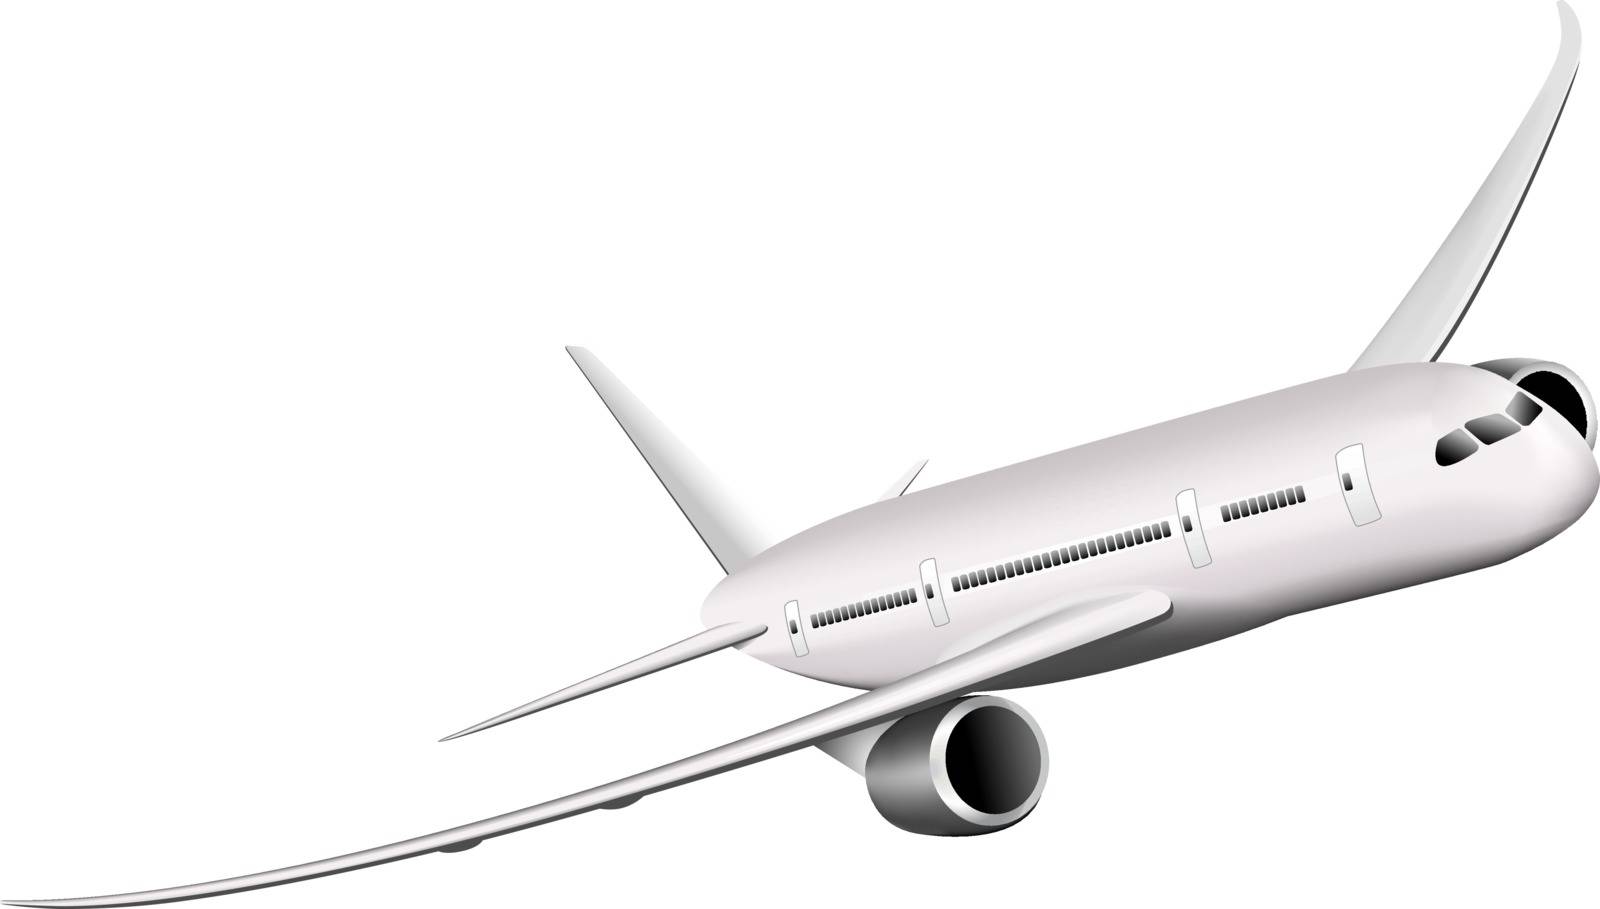 Passenger airplane on a white background. Large modern airliner. Vector illustration.